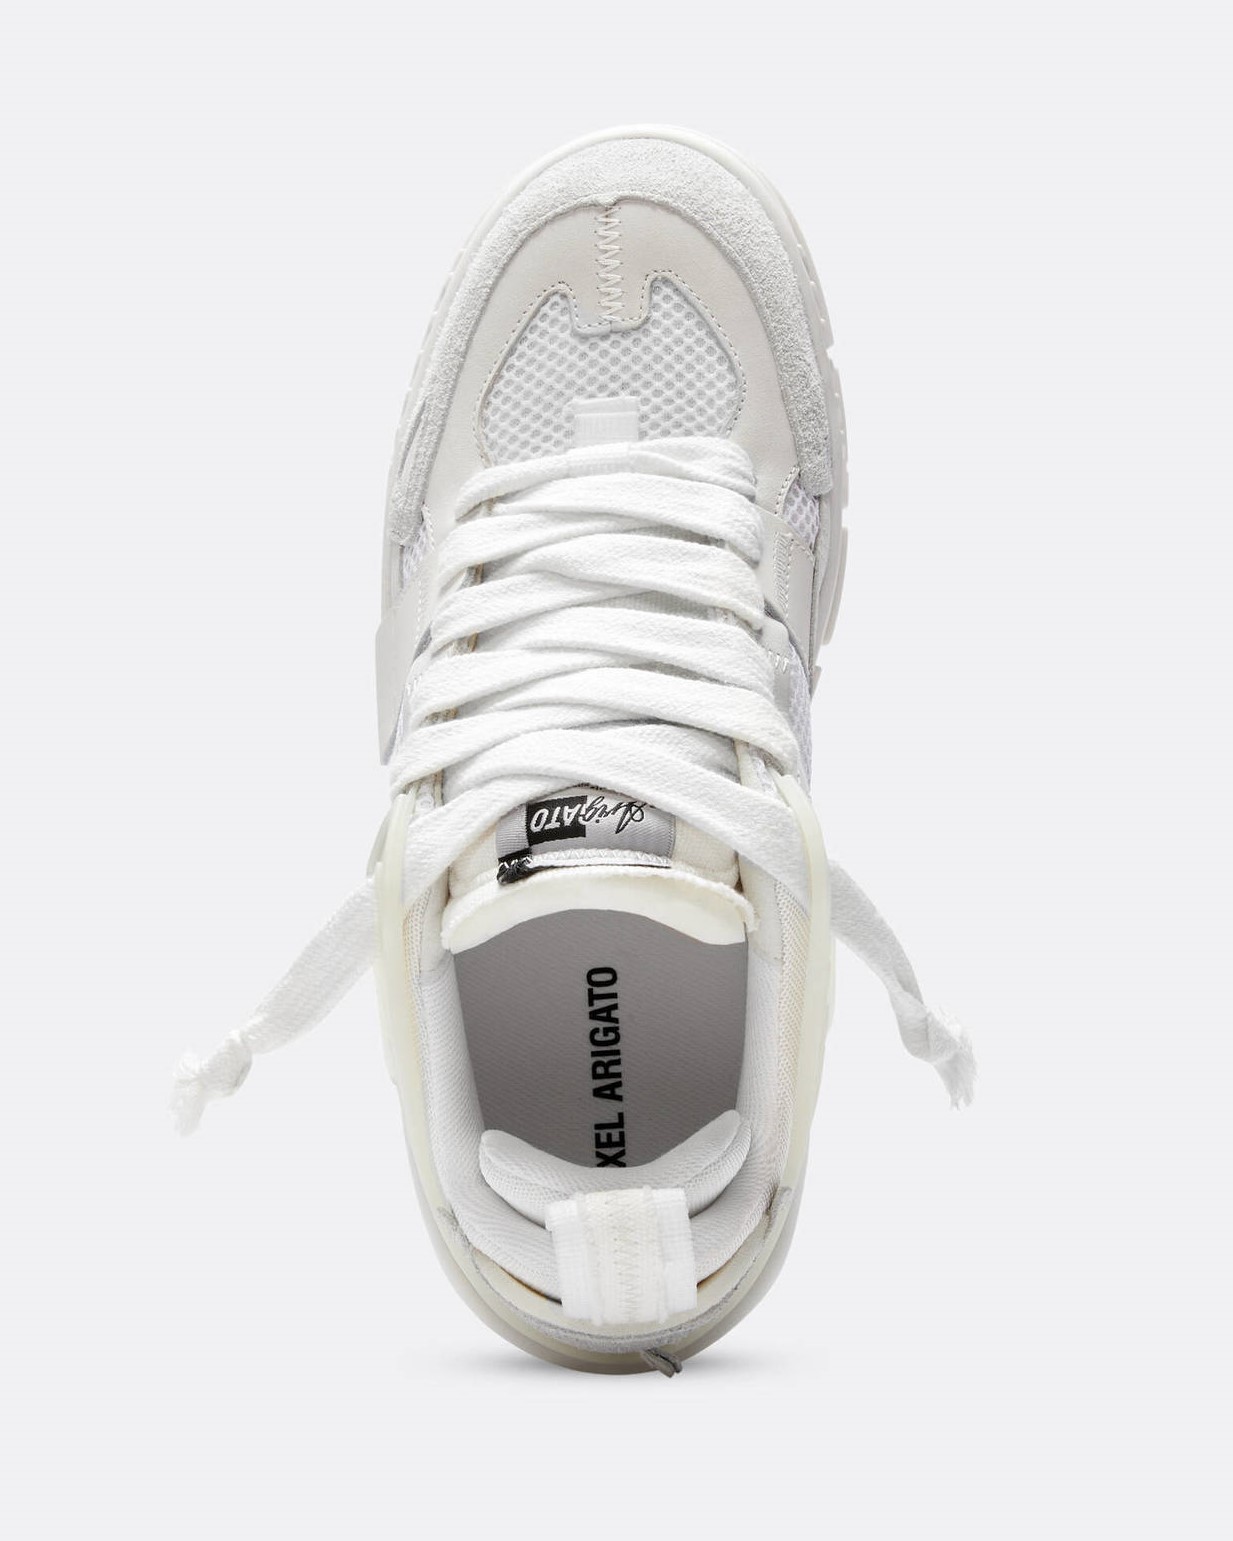 AXEL ARIGATO Area Patchwork Sneaker in White/White 39